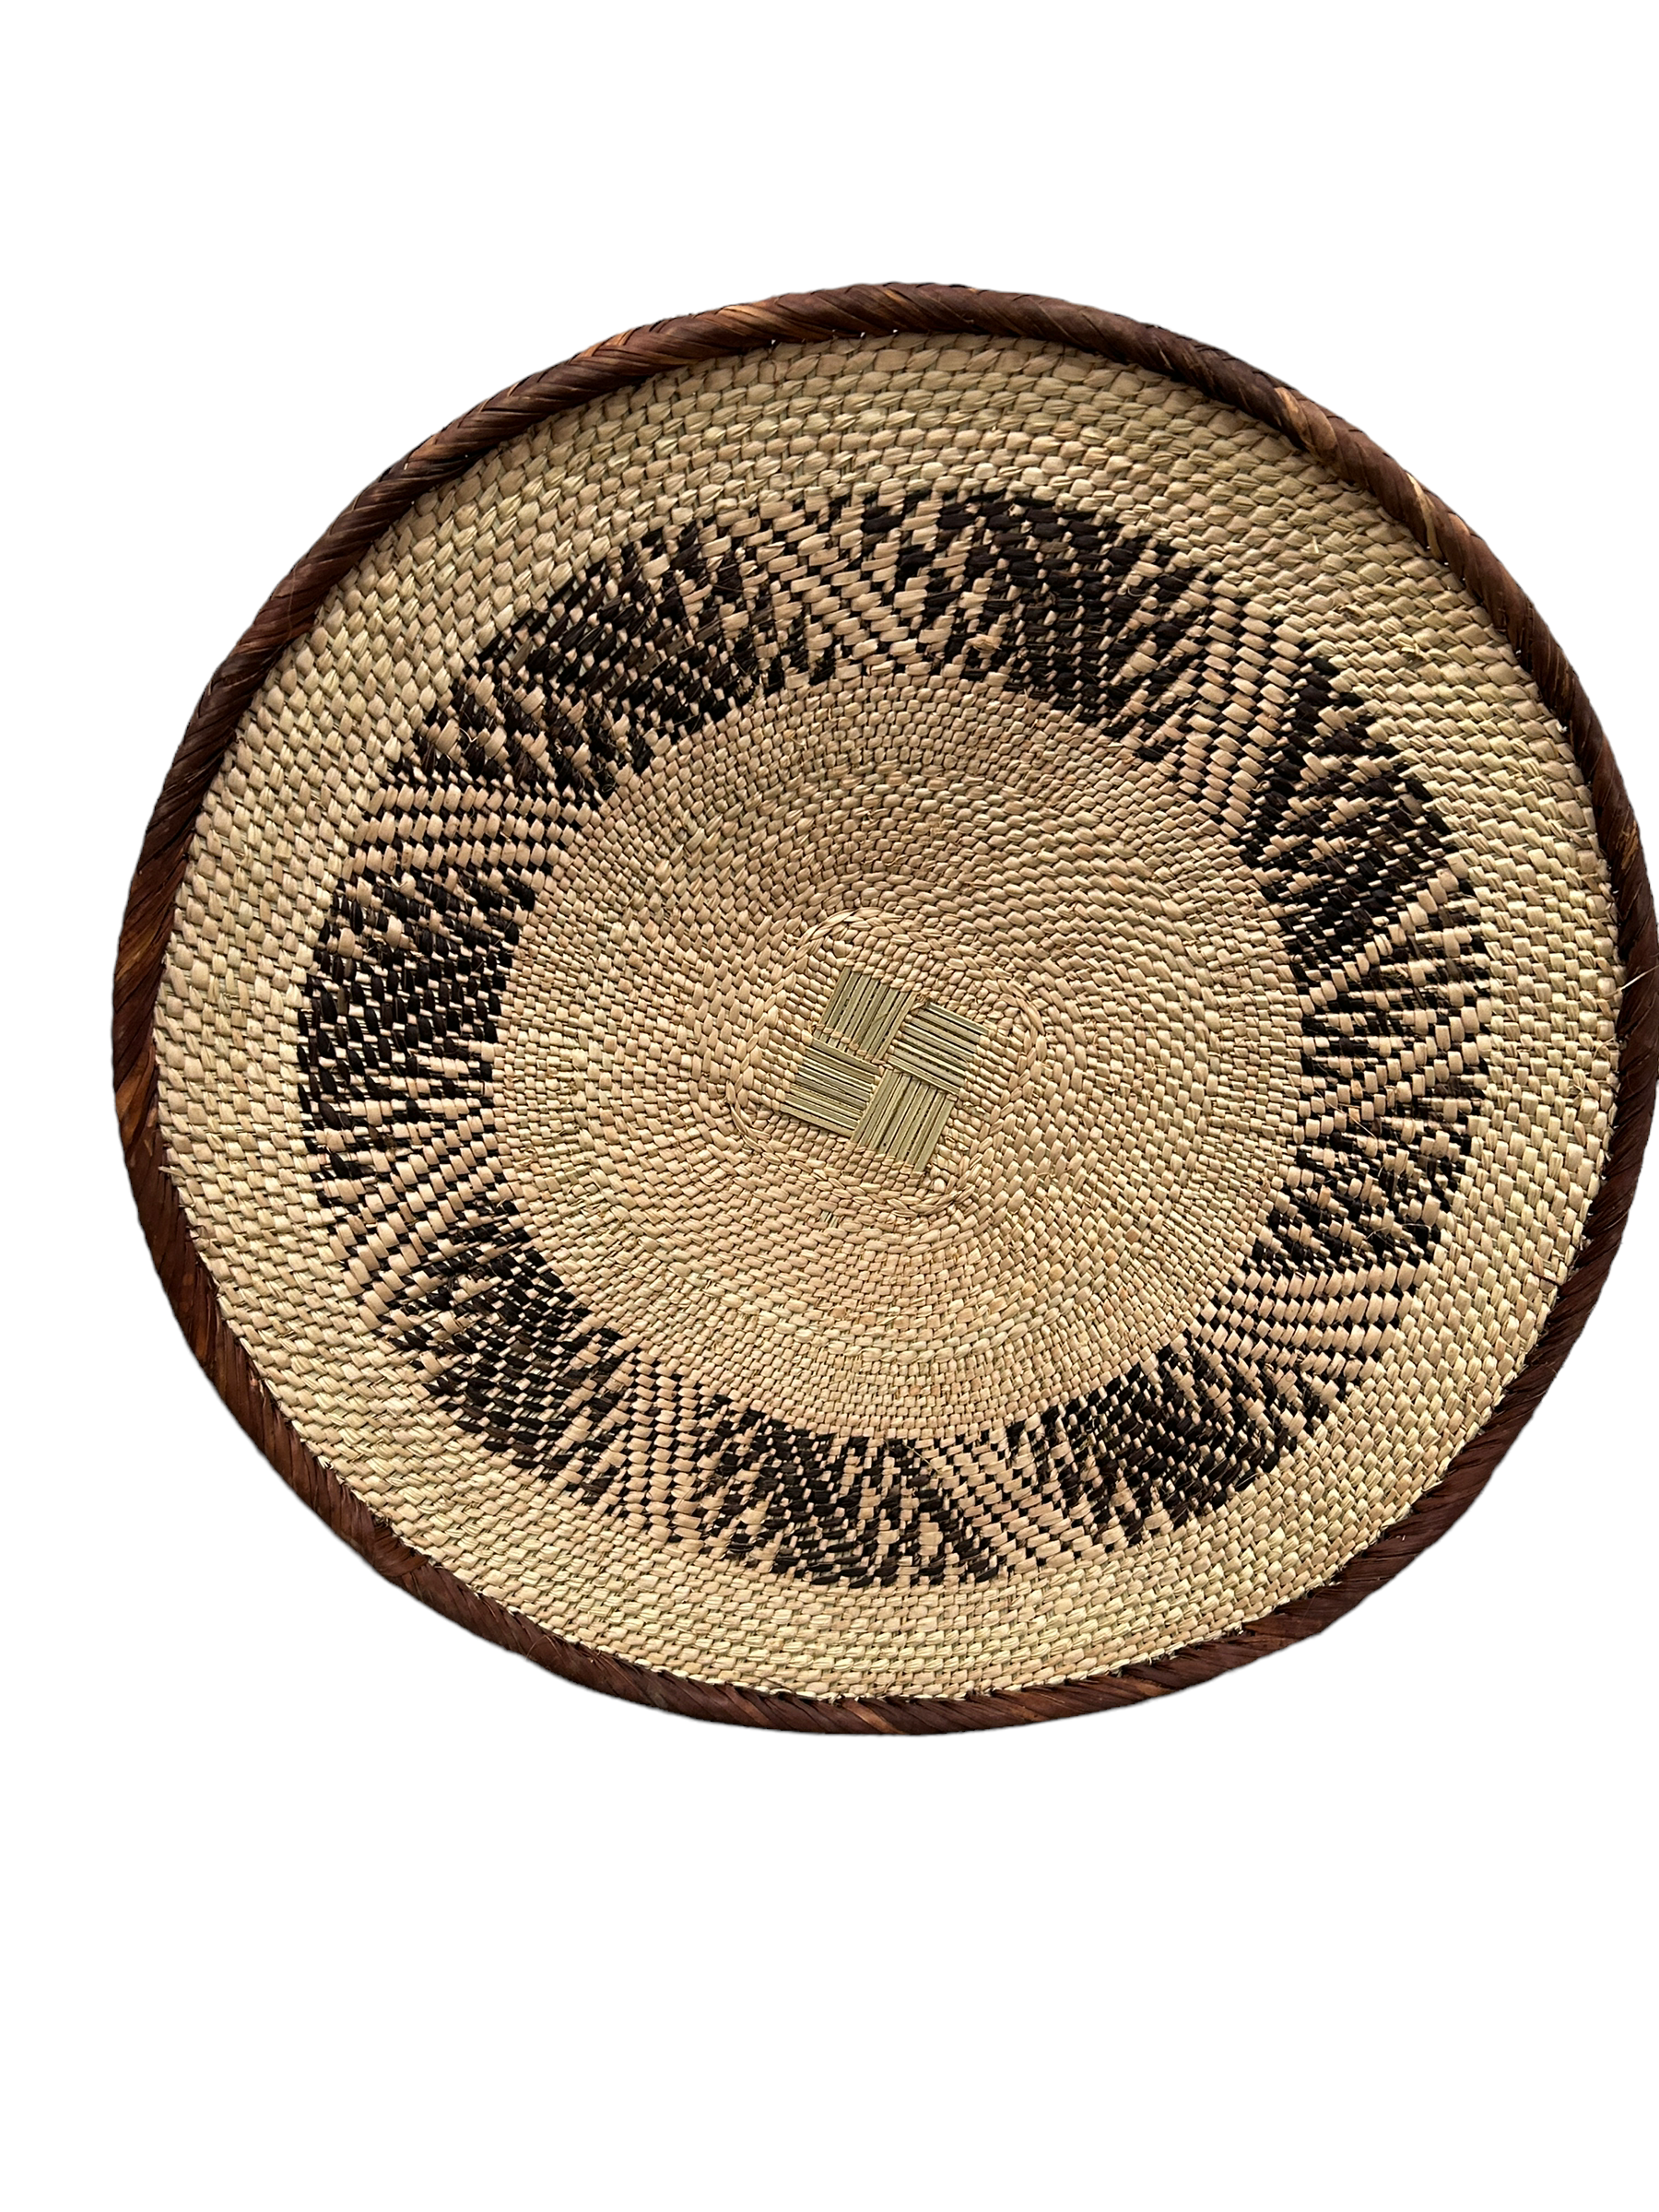 botanicalboysuk Tonga Basket Natural (47-05)